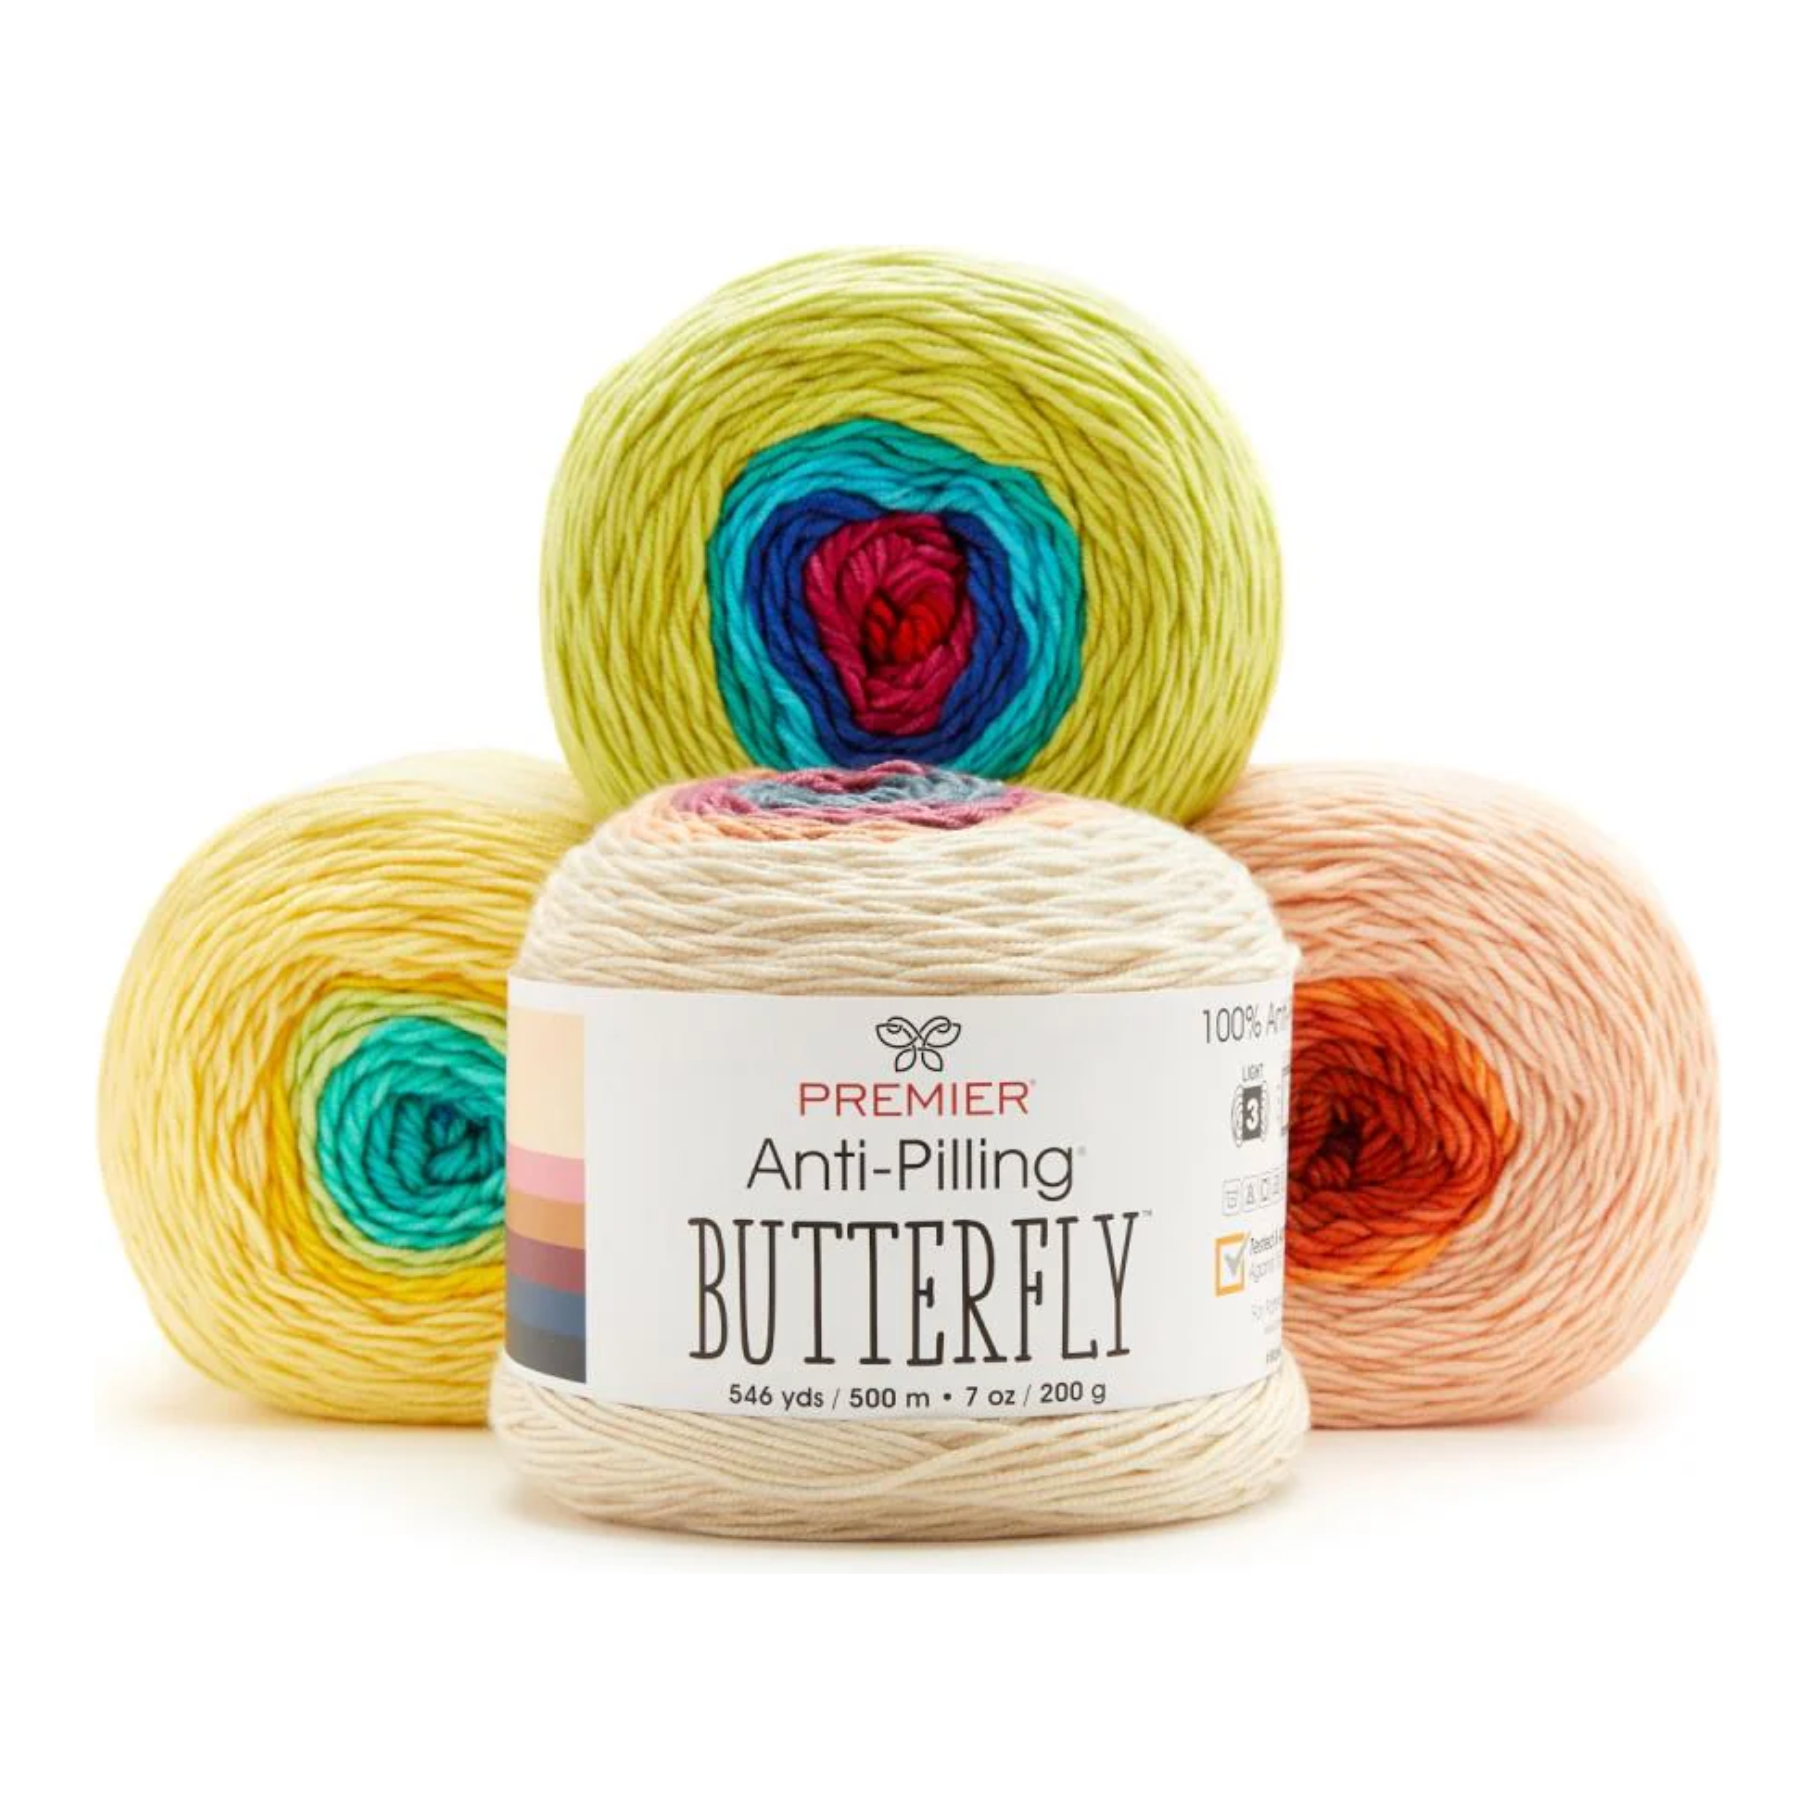 Premier Butterfly Yarn Sold As A 3 pack